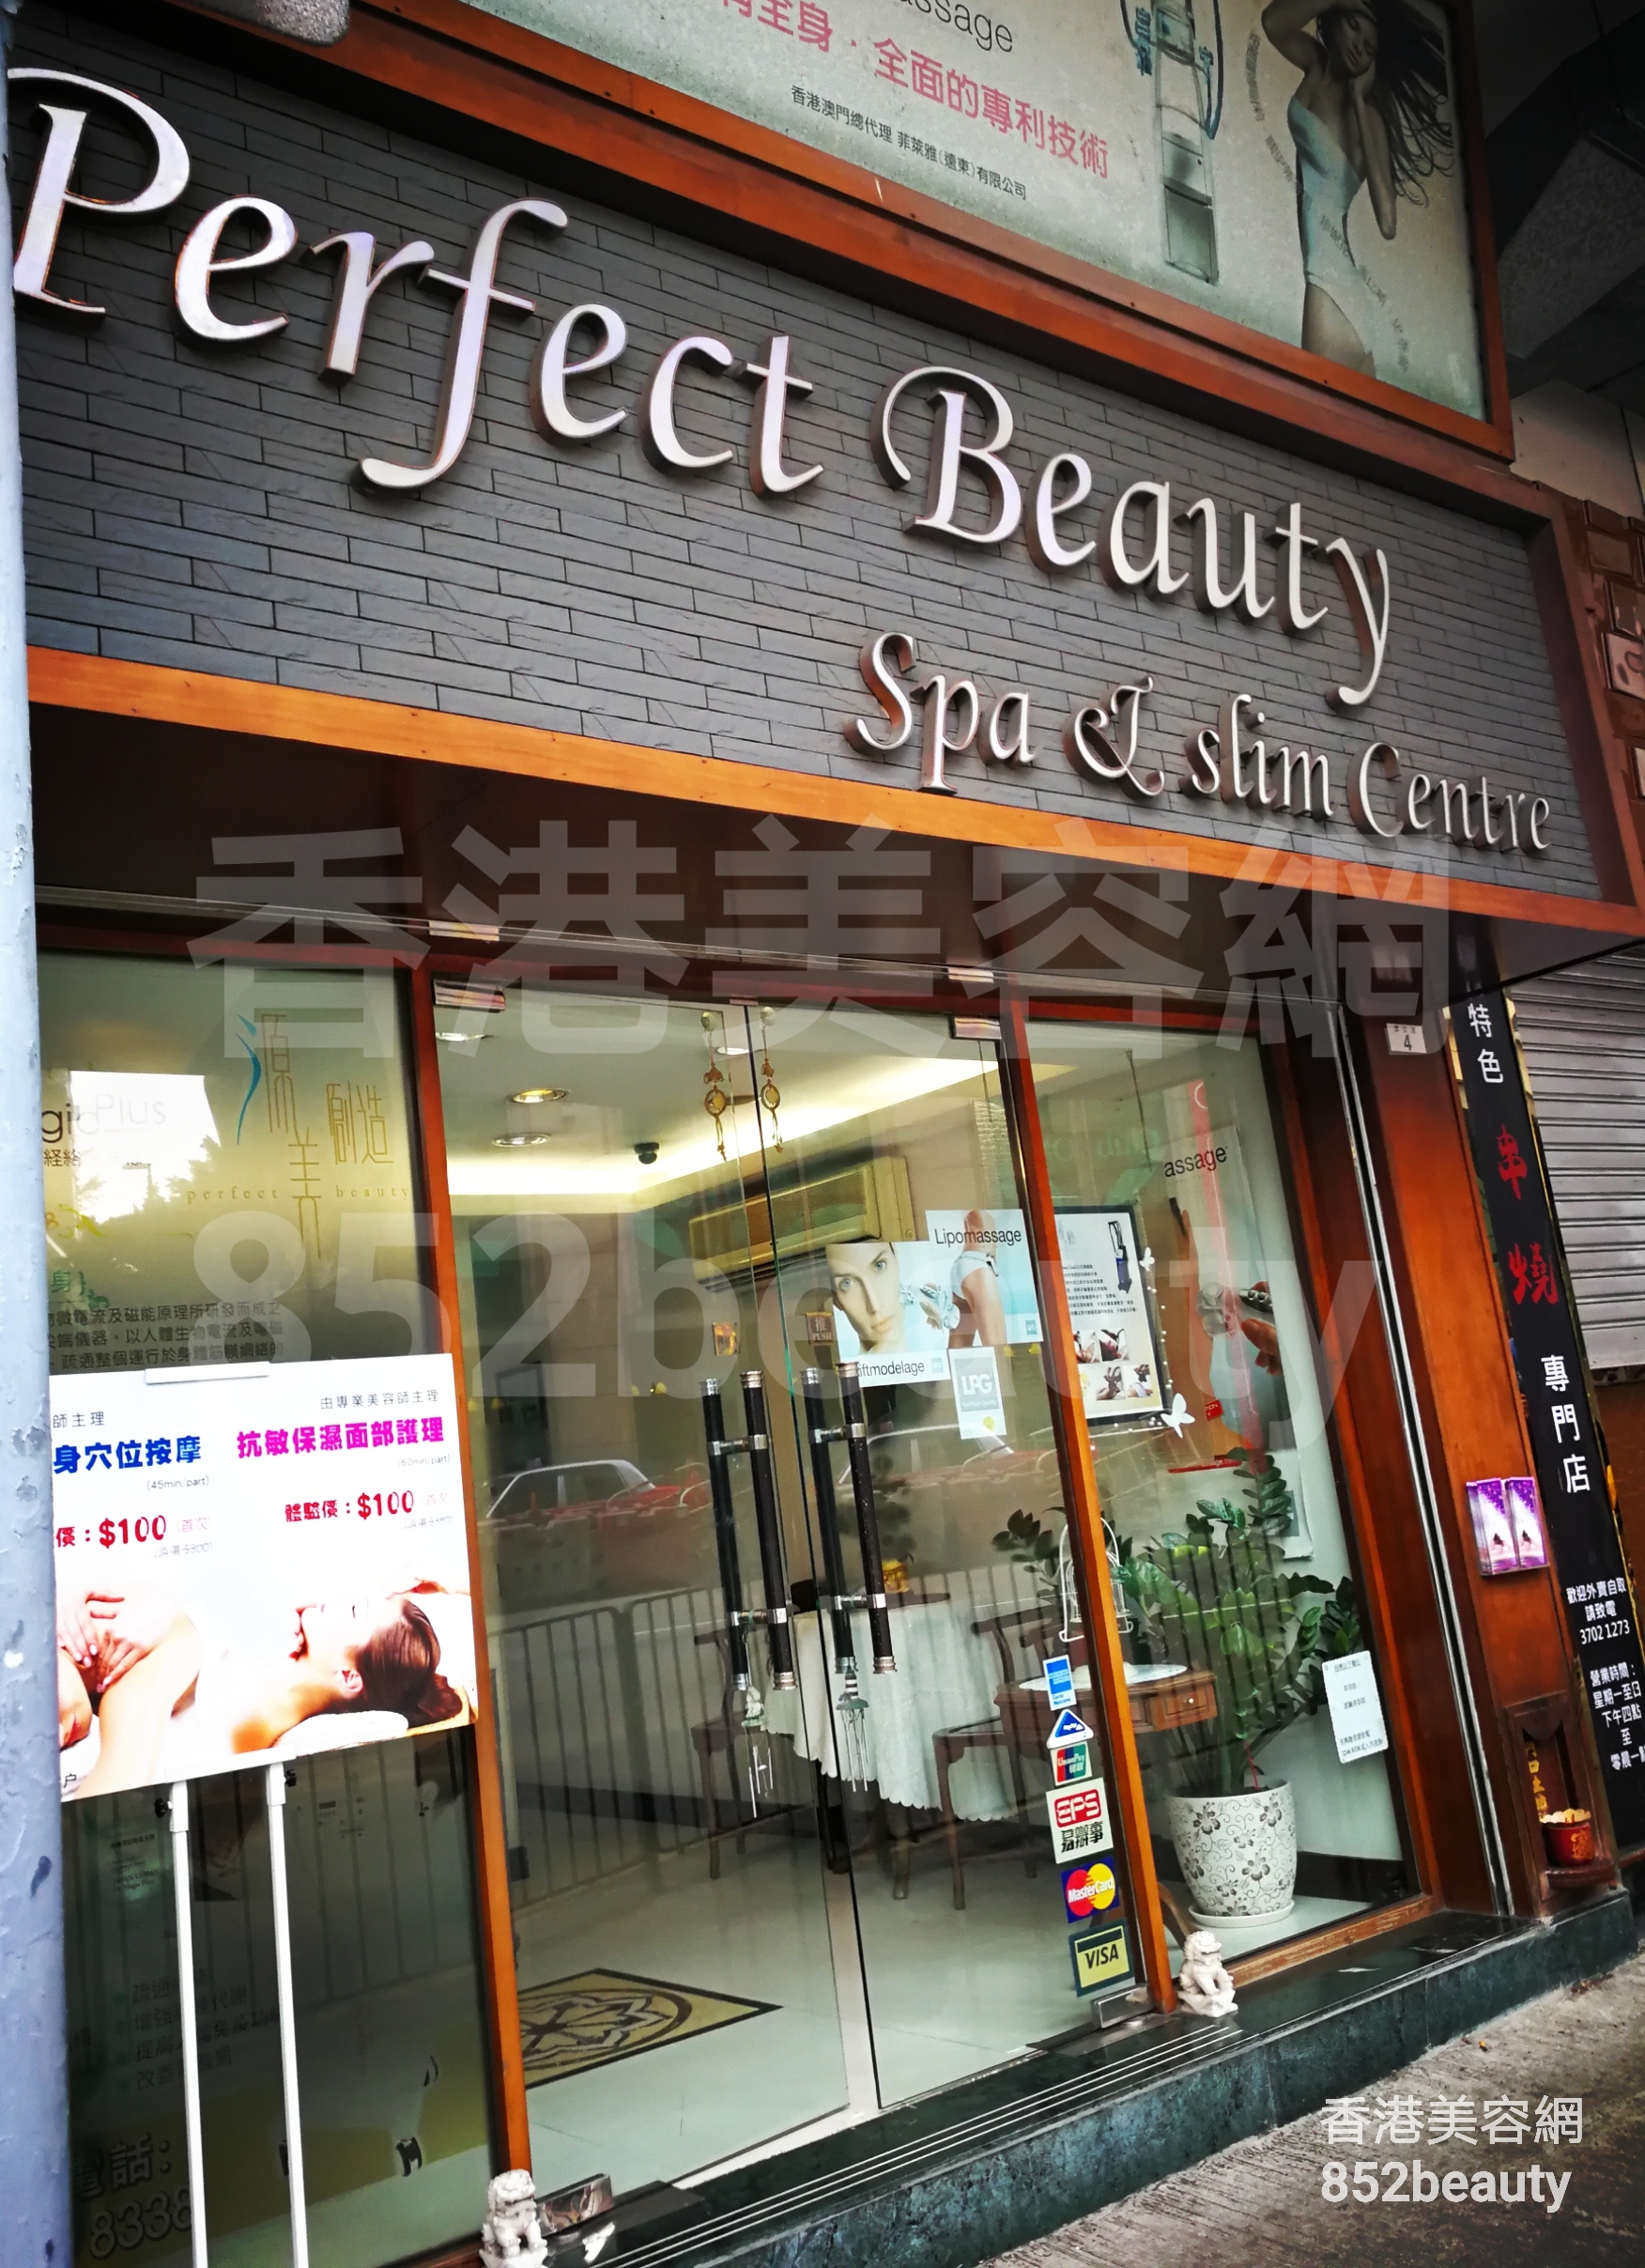 美容院 Beauty Salon: Perfect beauty (土瓜灣店)